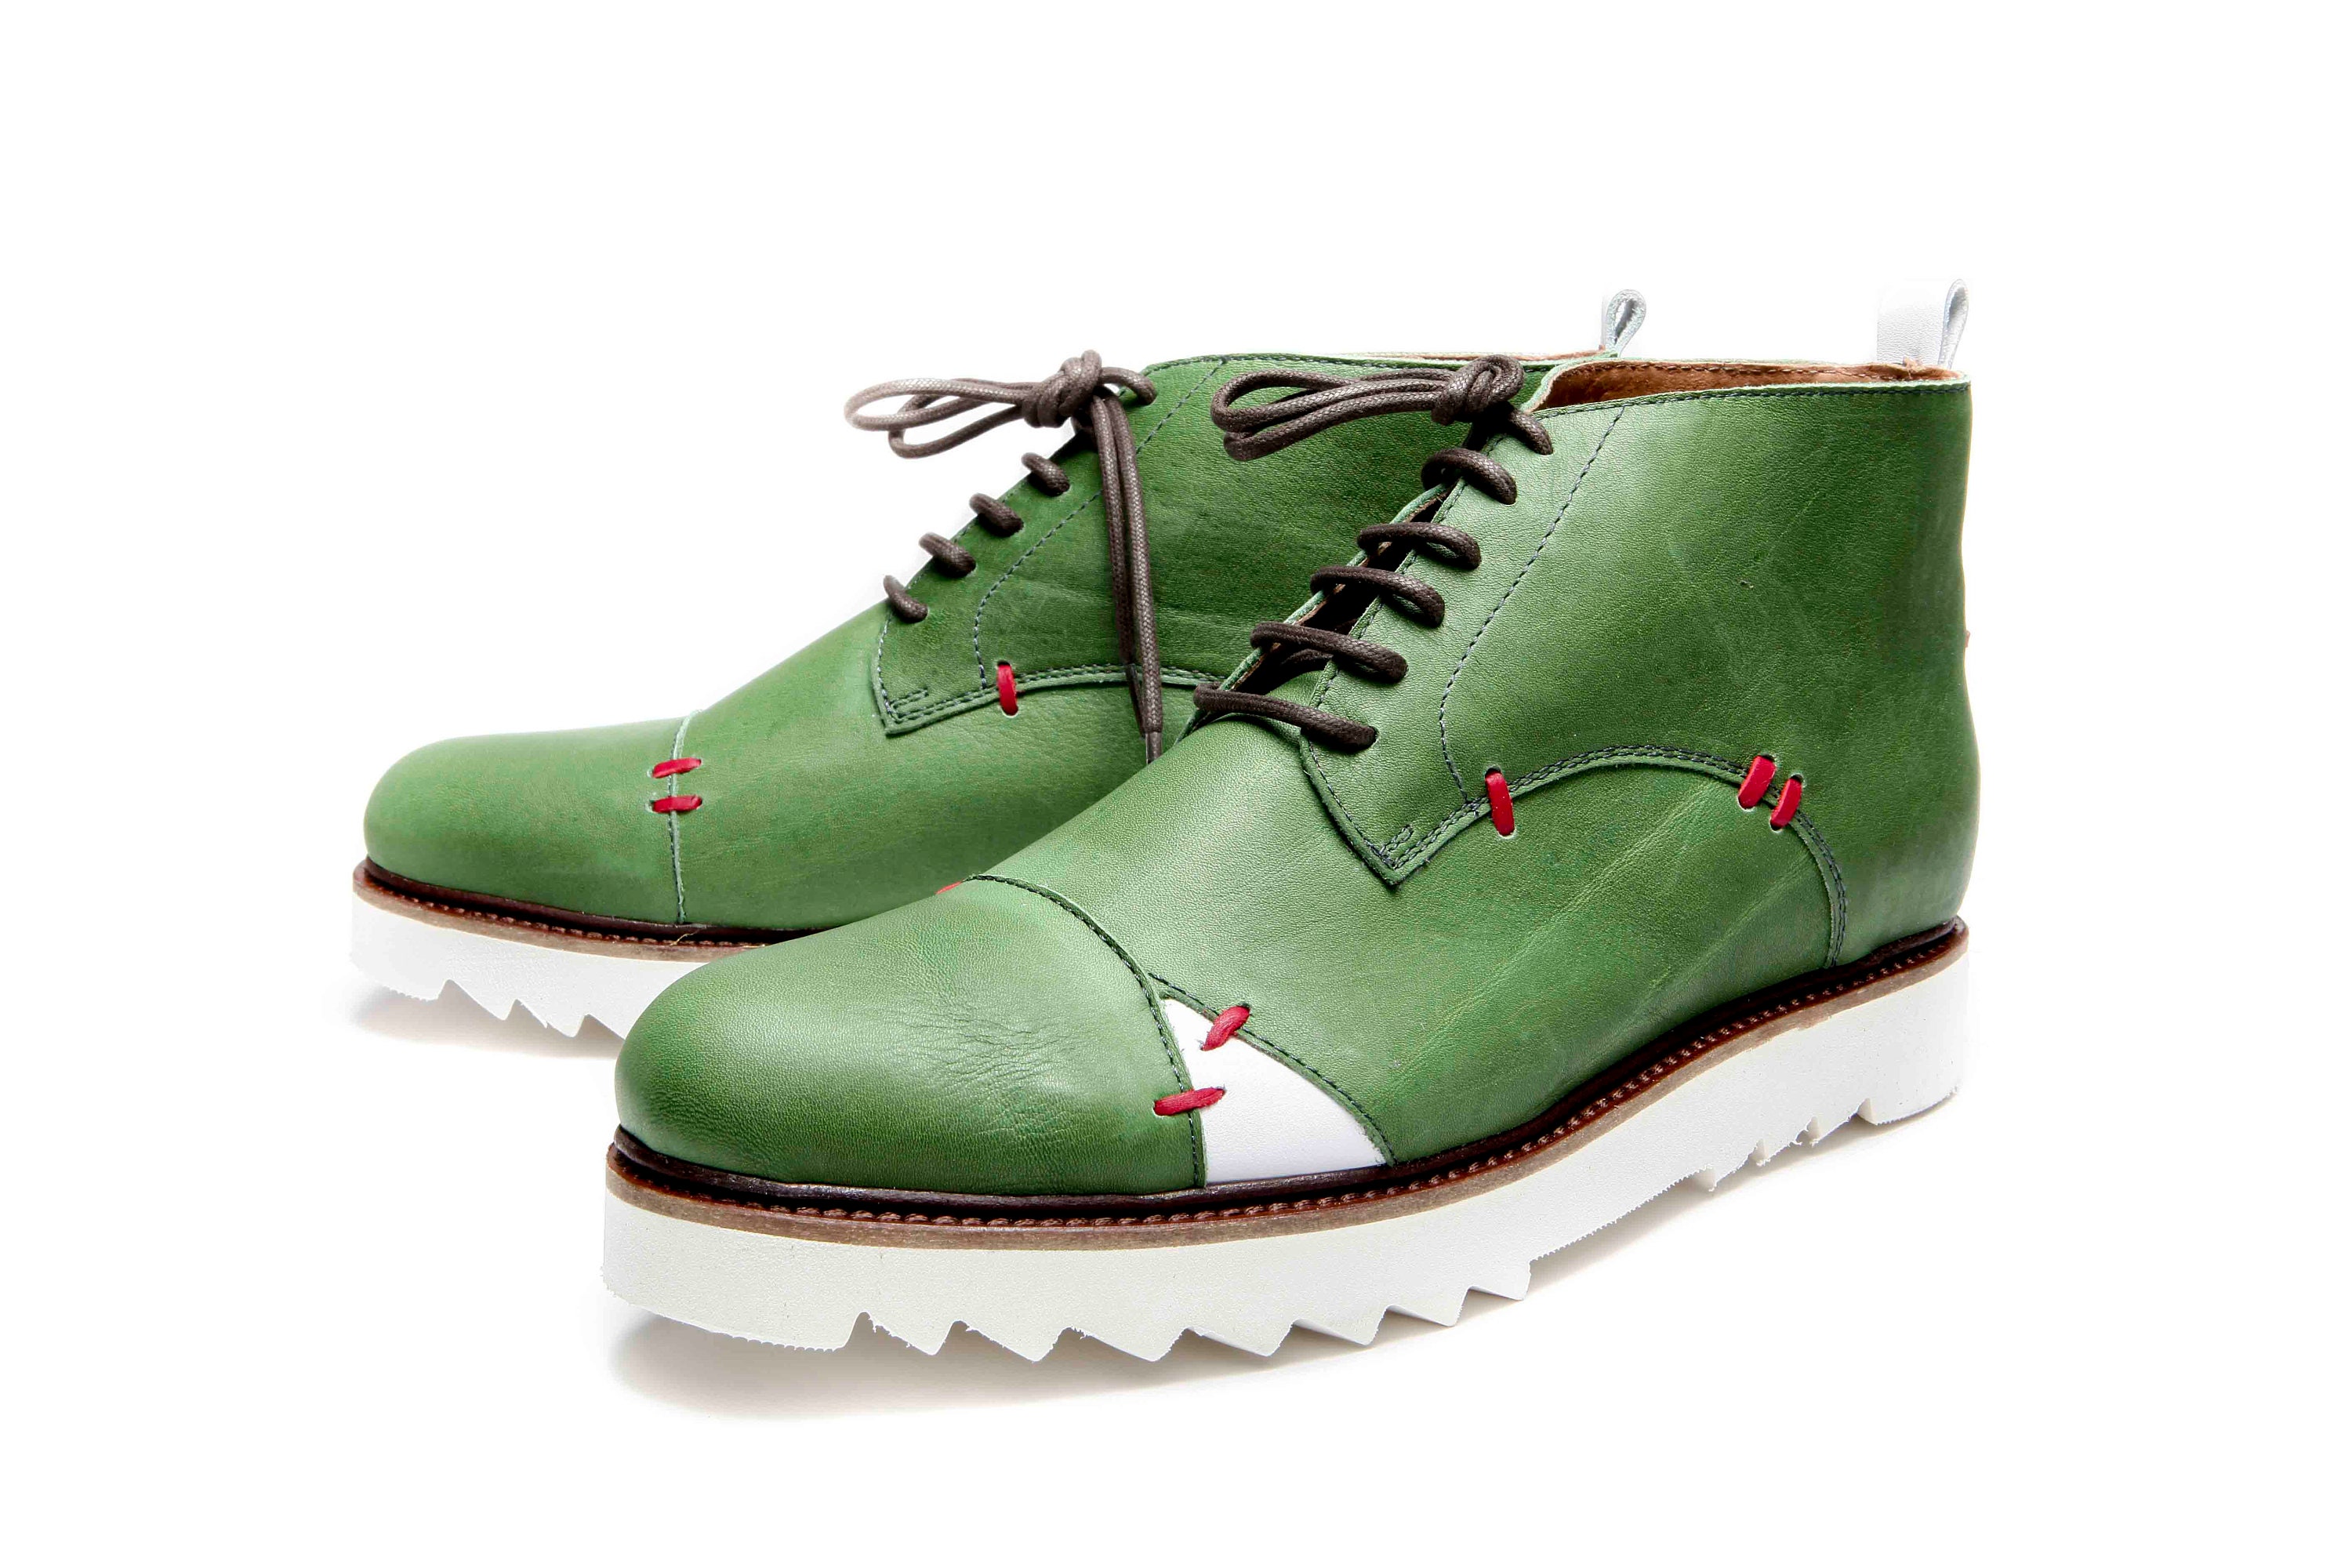 Zapatos hechos a mano verdes para hombre Botines de cuero para hombres Zapatos únicos para hombres Zapatos Oxford verdes Zapatos Zapatos para hombre Botas Botas de vestir Zapatos cómodos para hombres Botines verdes 